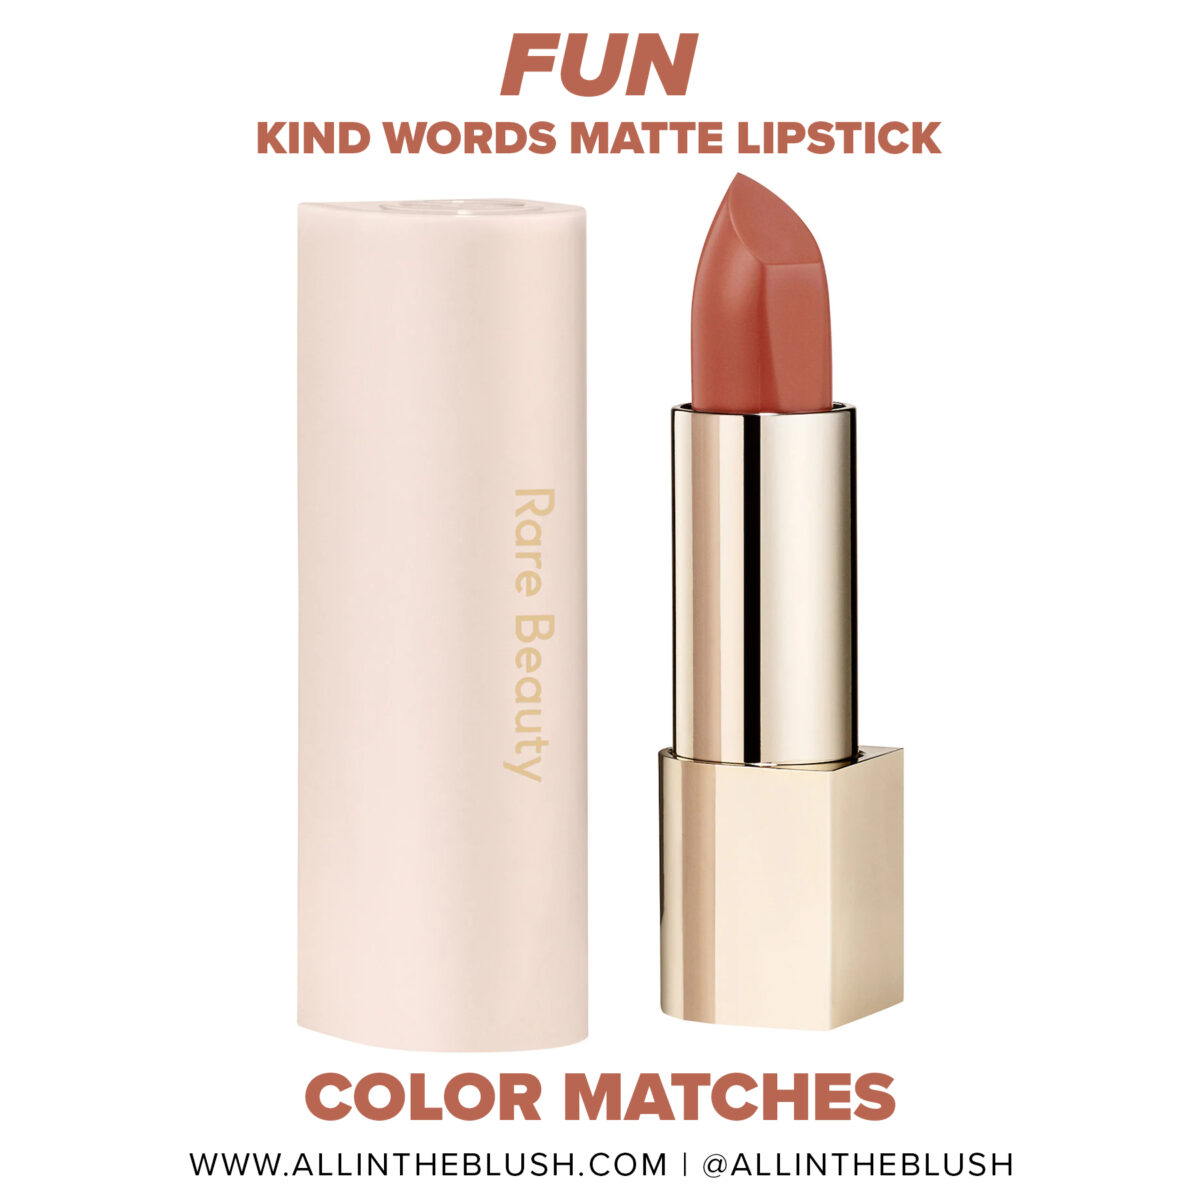 Rare Beauty Fun Kind Words Matte Lipstick Color Matches